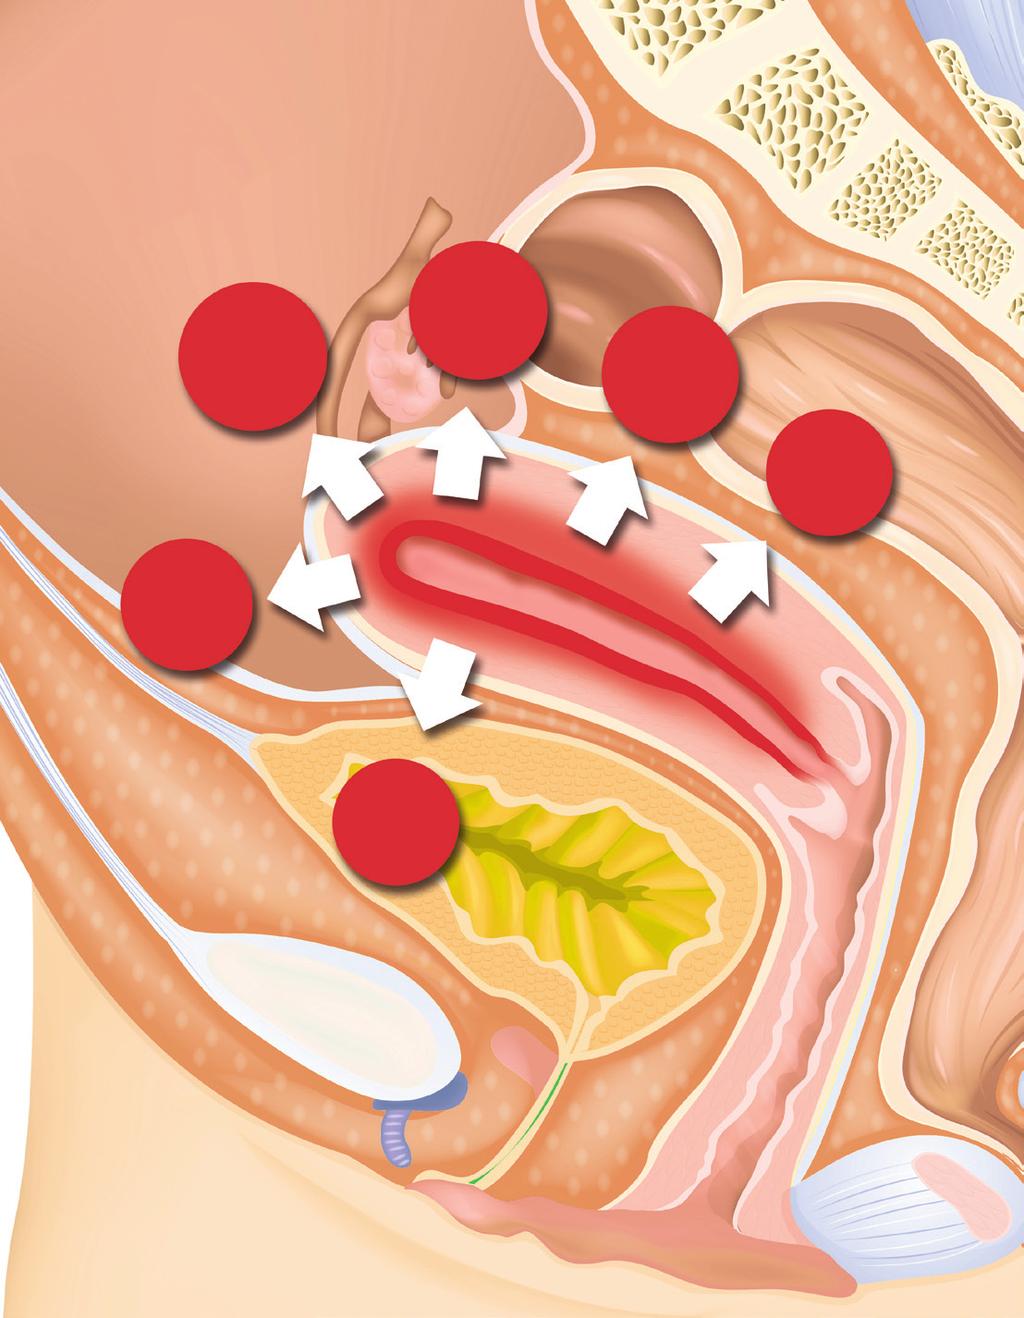 ENDOMETRIOSIS Depth and location Uterine wall Fallopian tubes Bladder Ovaries Peritoneum Colon Peritoneum Ovaries Fallopian tubes Uterine wall